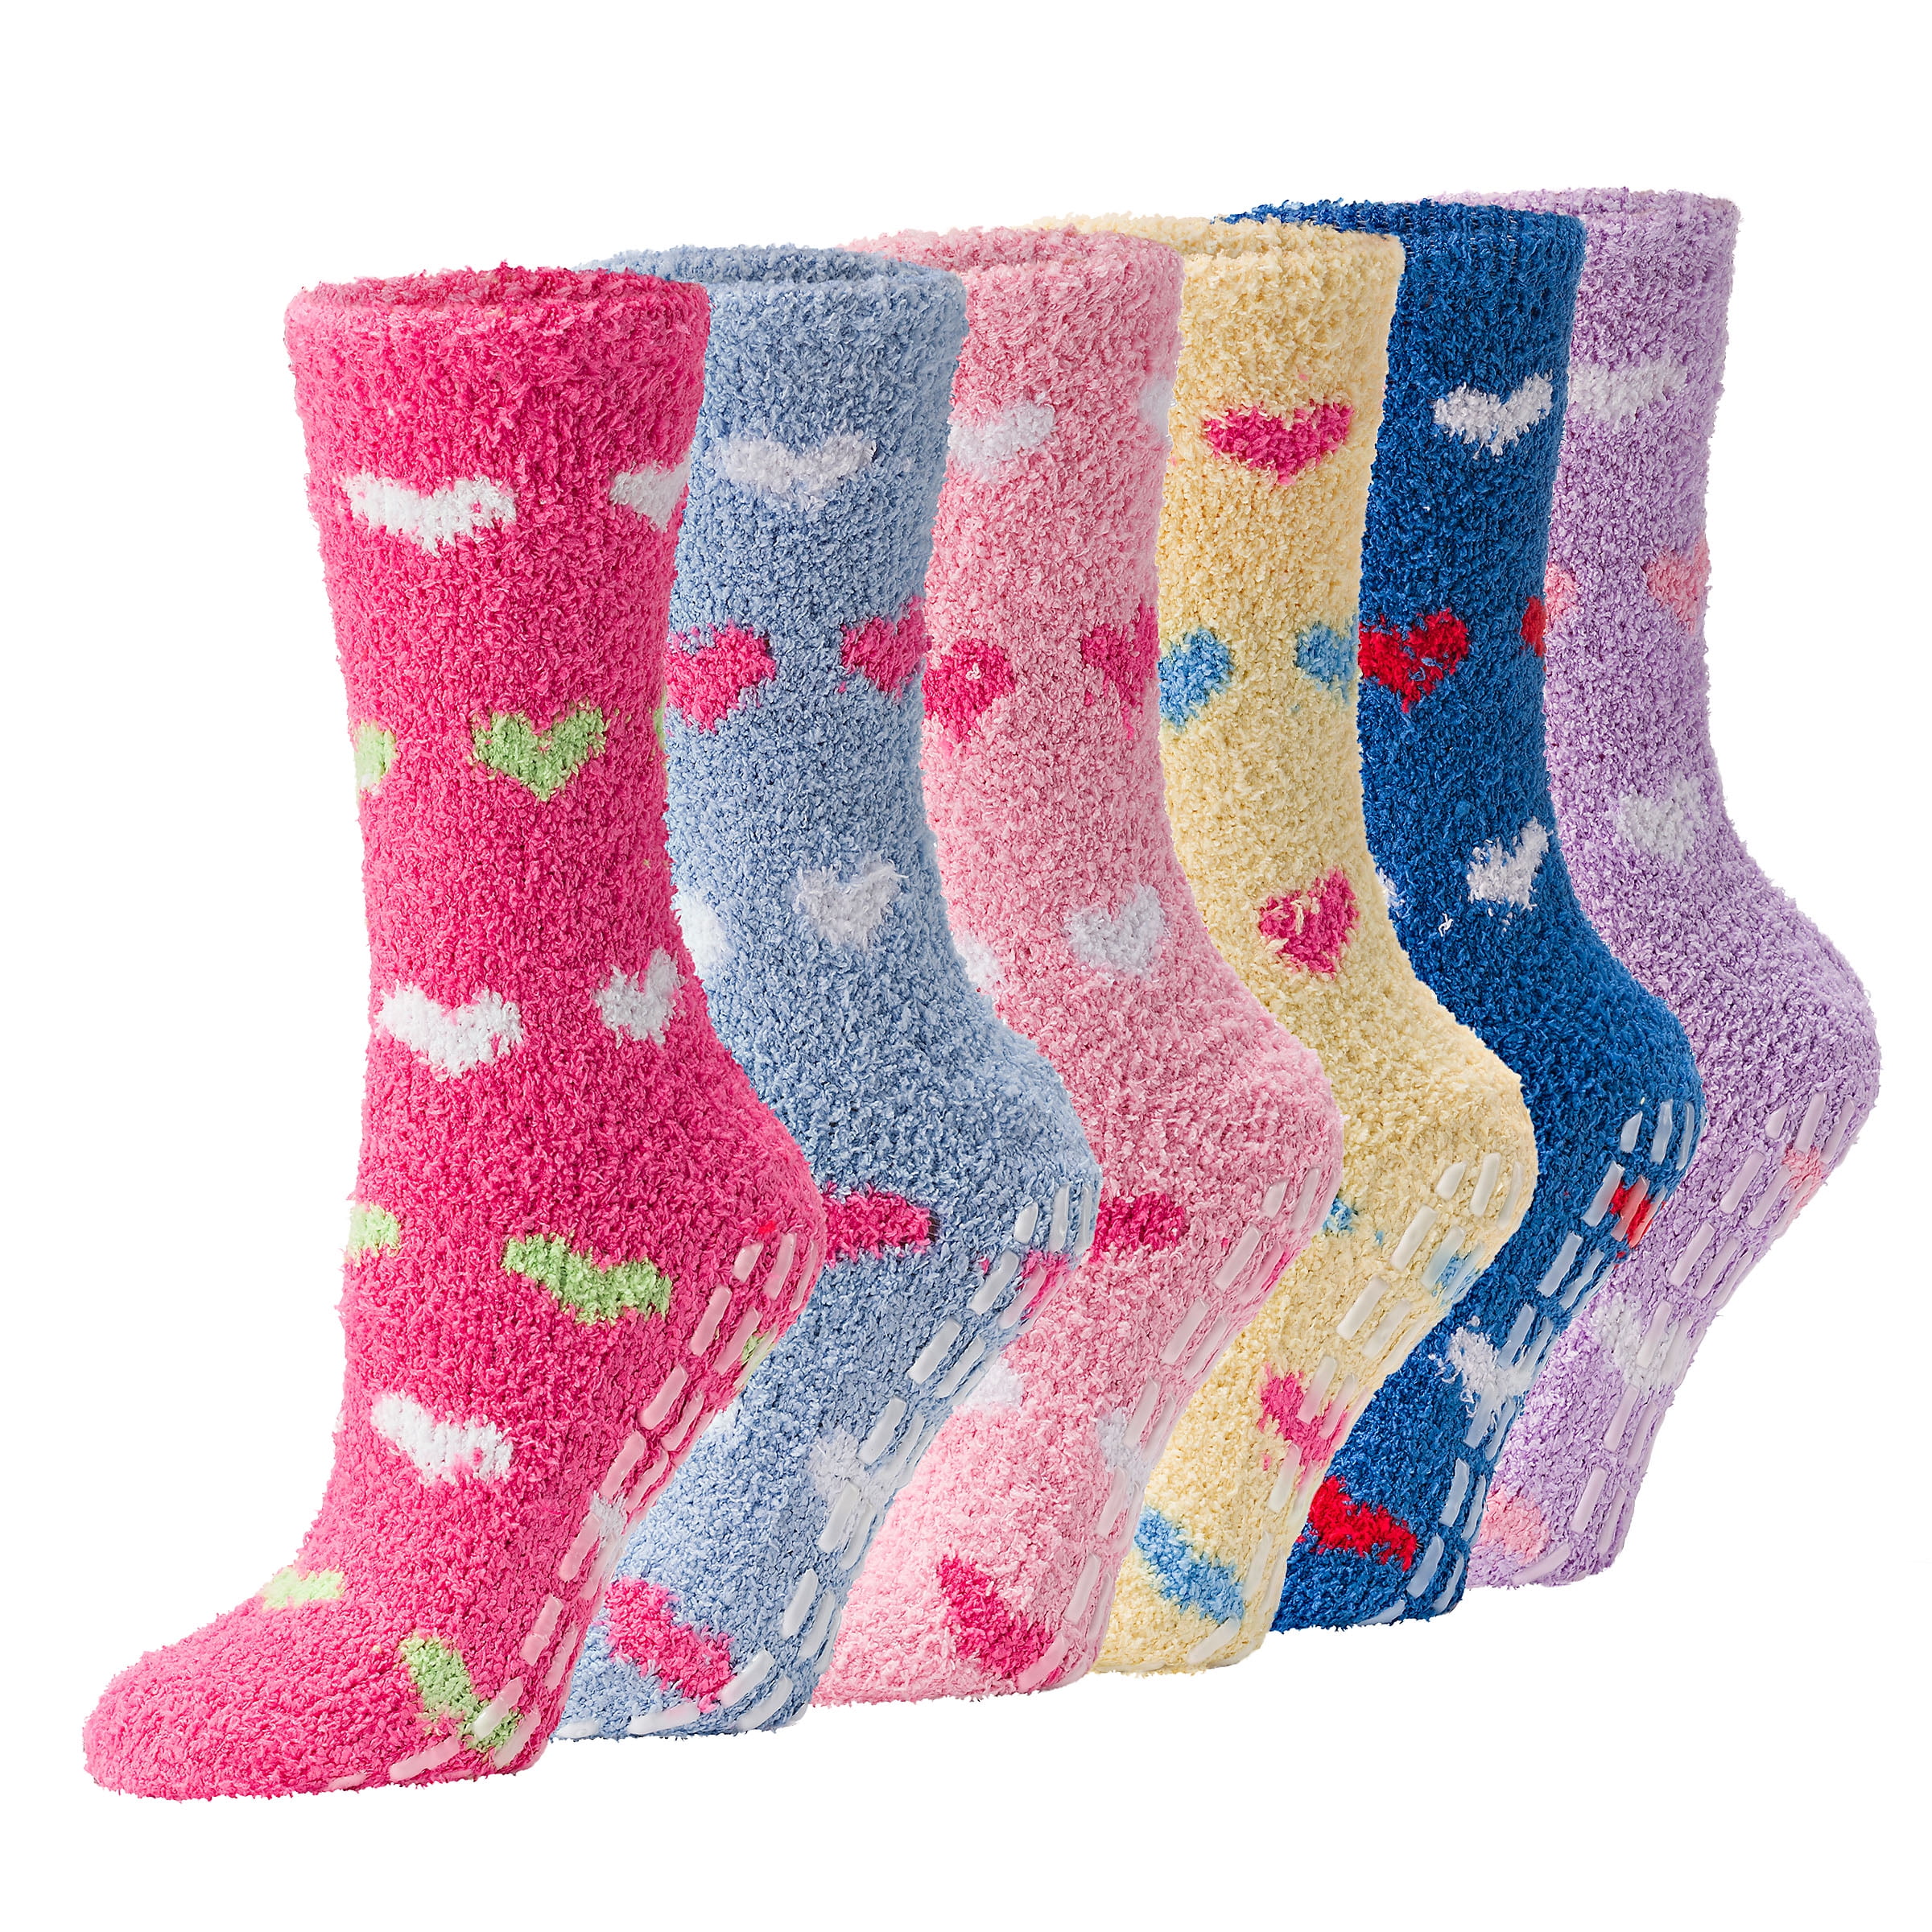 SOMESHINE Women Teen Girls Over Knee High Fuzzy Socks Embroidery Dog Fluffy Long Stockings Warm Casual Crew Winter Socks 